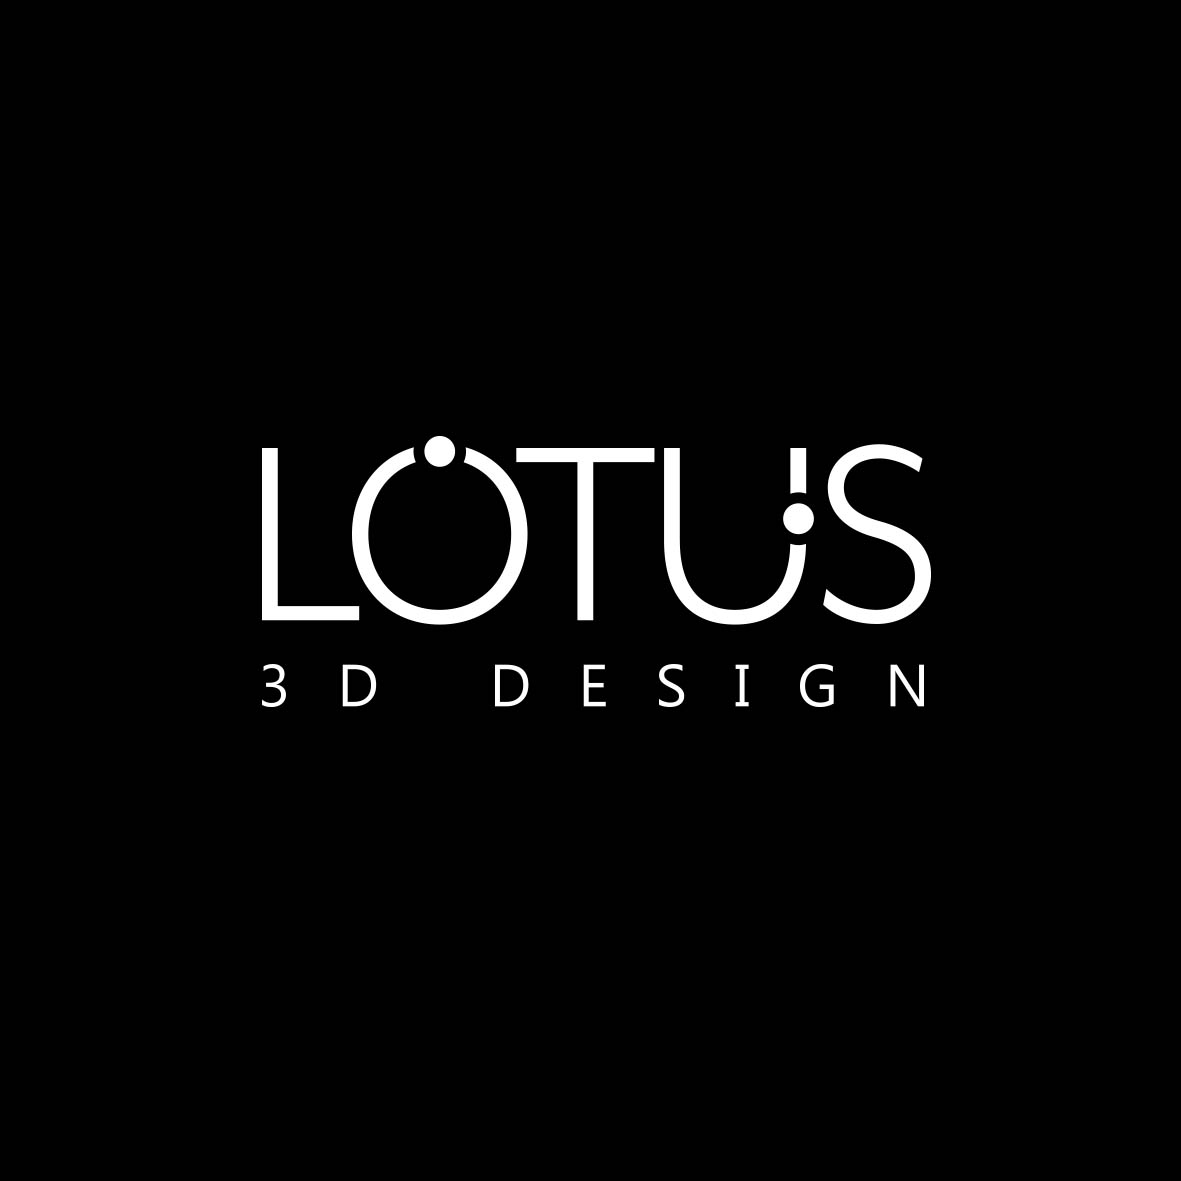 lotus 3d design - לוטוס הדמיות אדריכליות